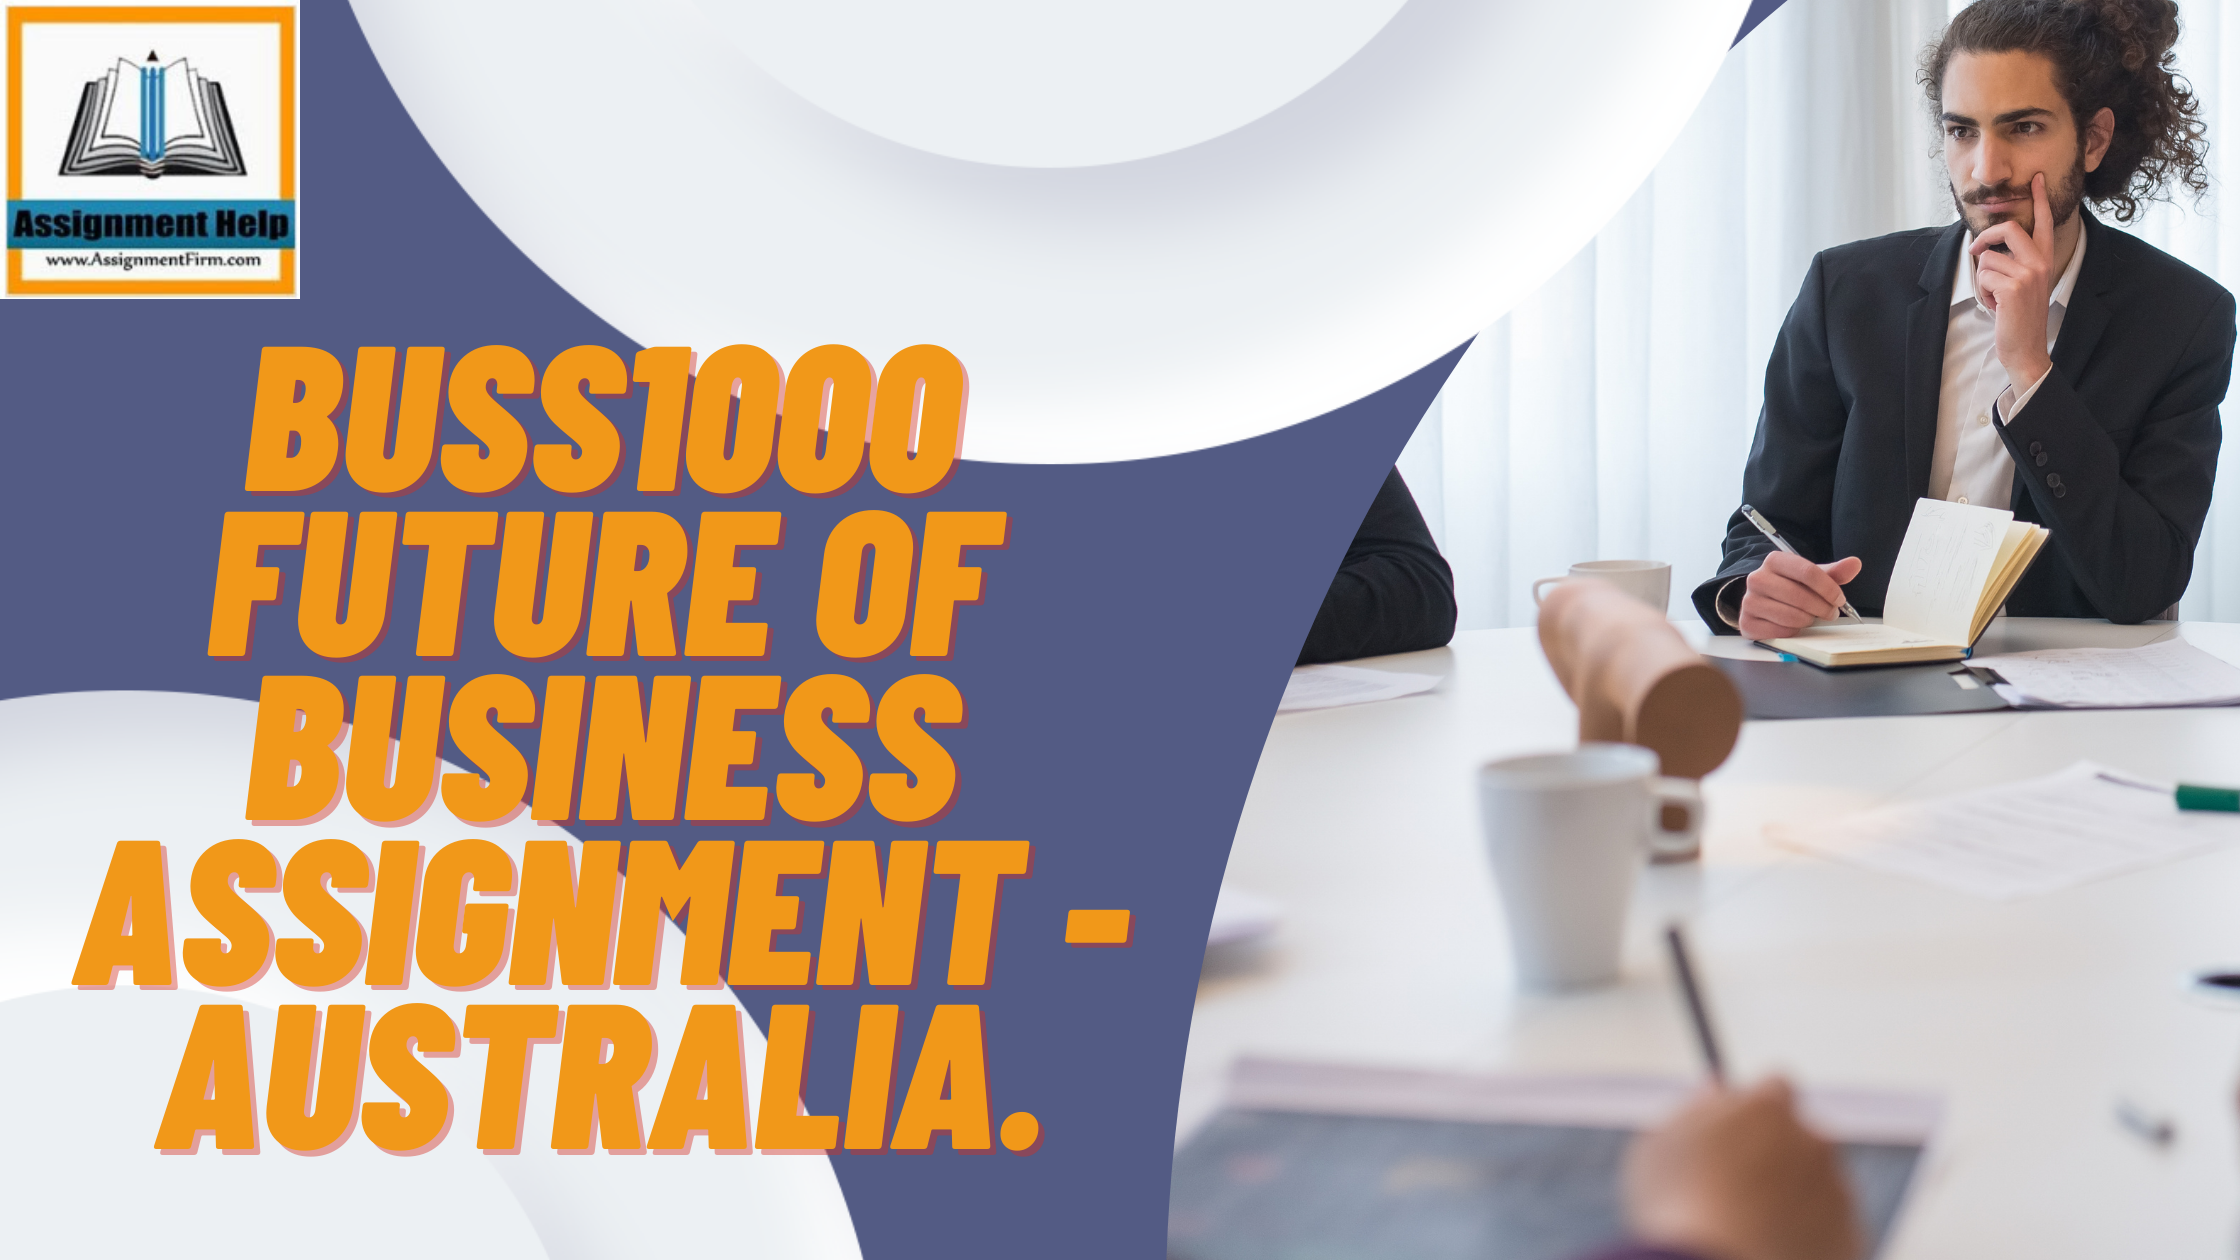 BUSS1000 Future of Business Assignment - Australia.